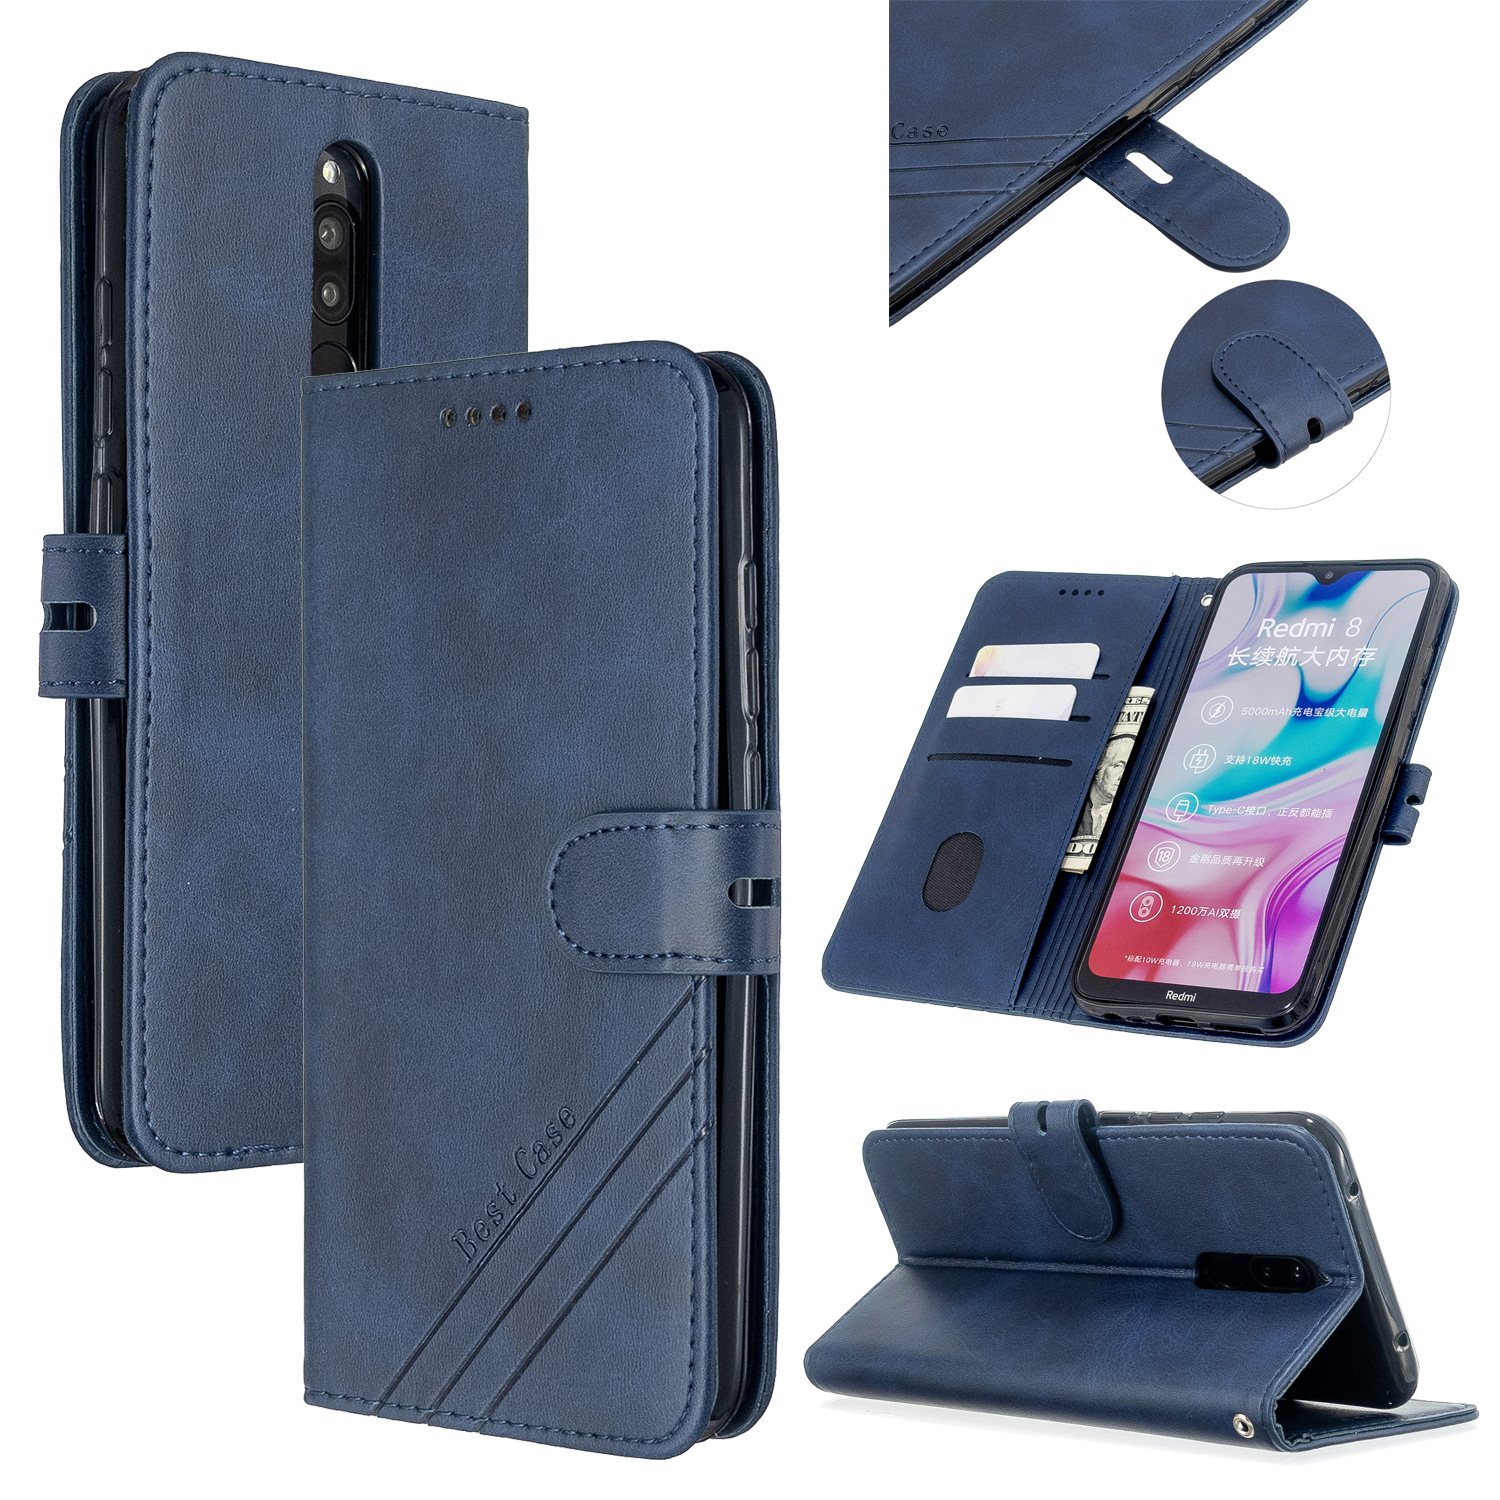 For Redmi Note 8T/Redmi 8/Redmi 8A Case Soft Leather Cover with Denim Texture Precise Cutouts Wallet Design Buckle Closure Smartphone Shell  blue